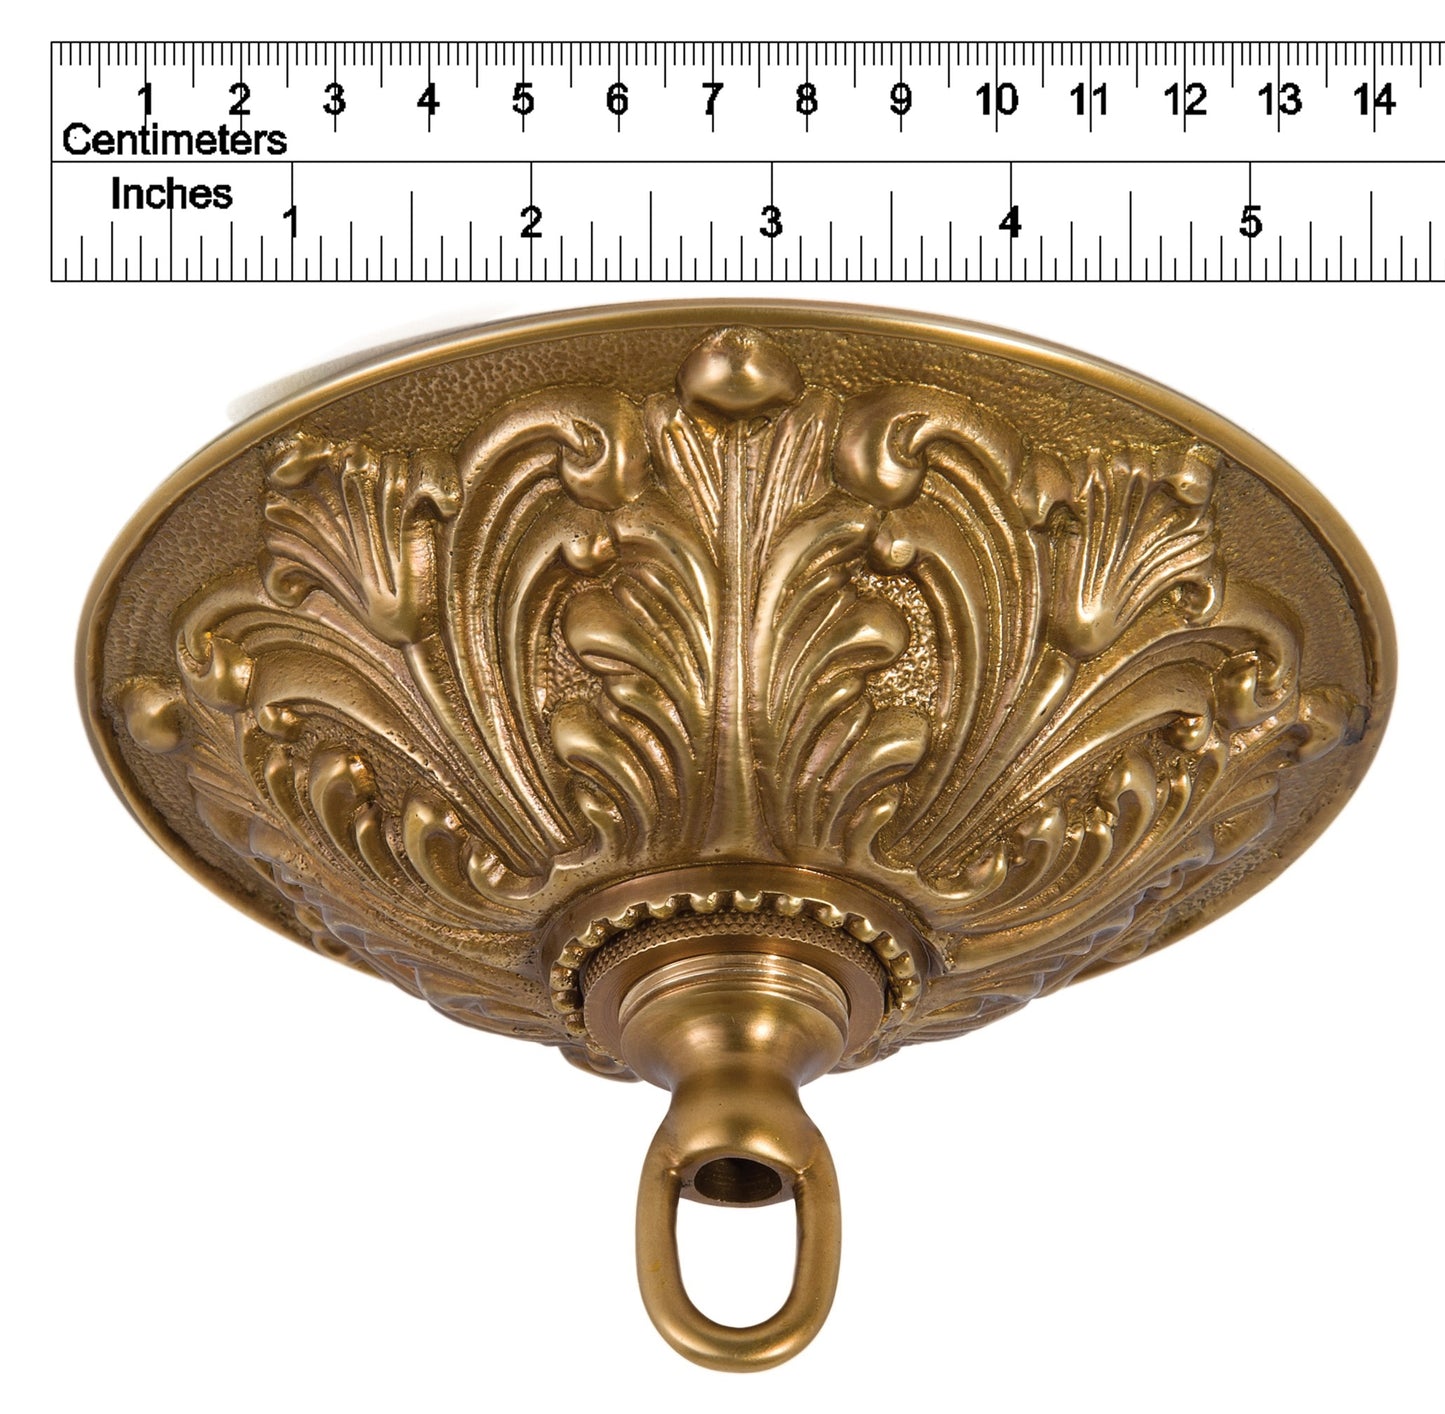 5-1/2" Diameter Ceiling Canopy kit, Die Cast Brass Material, Antique Brass Finish